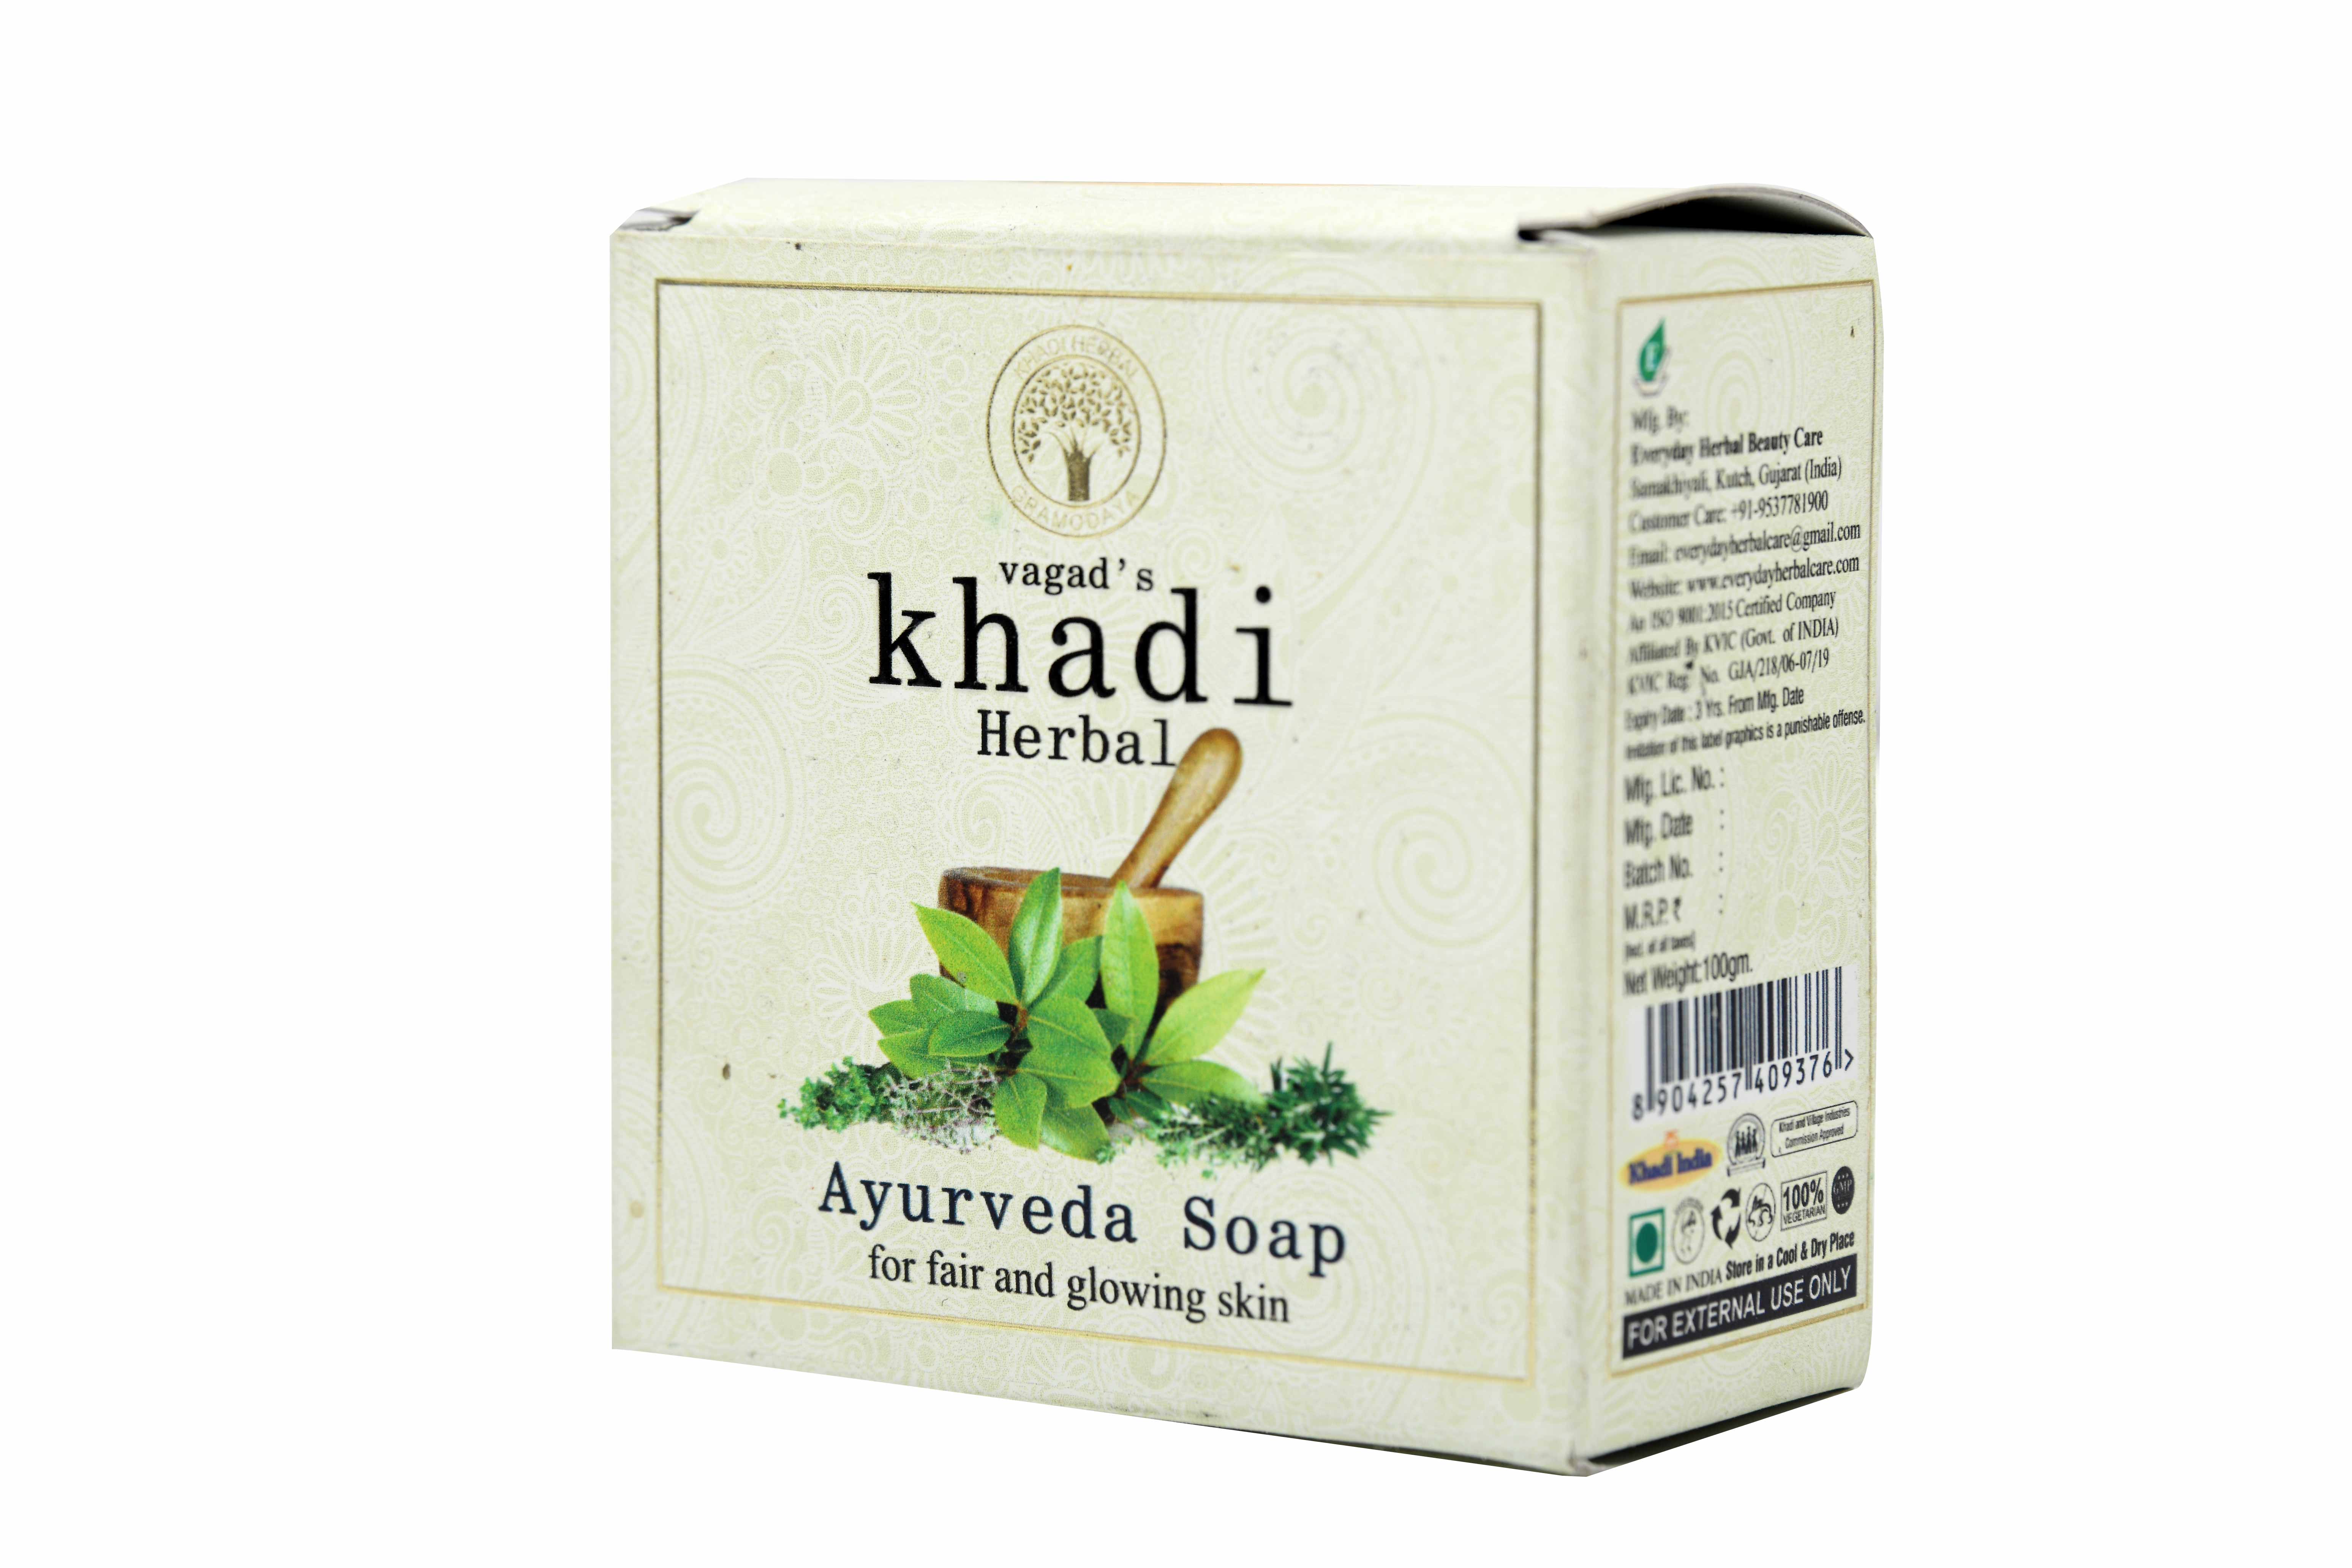 Buy Vagad's Khadi Ayurveda Milky Soap For Fair And Glowing Skin at Best Price Online